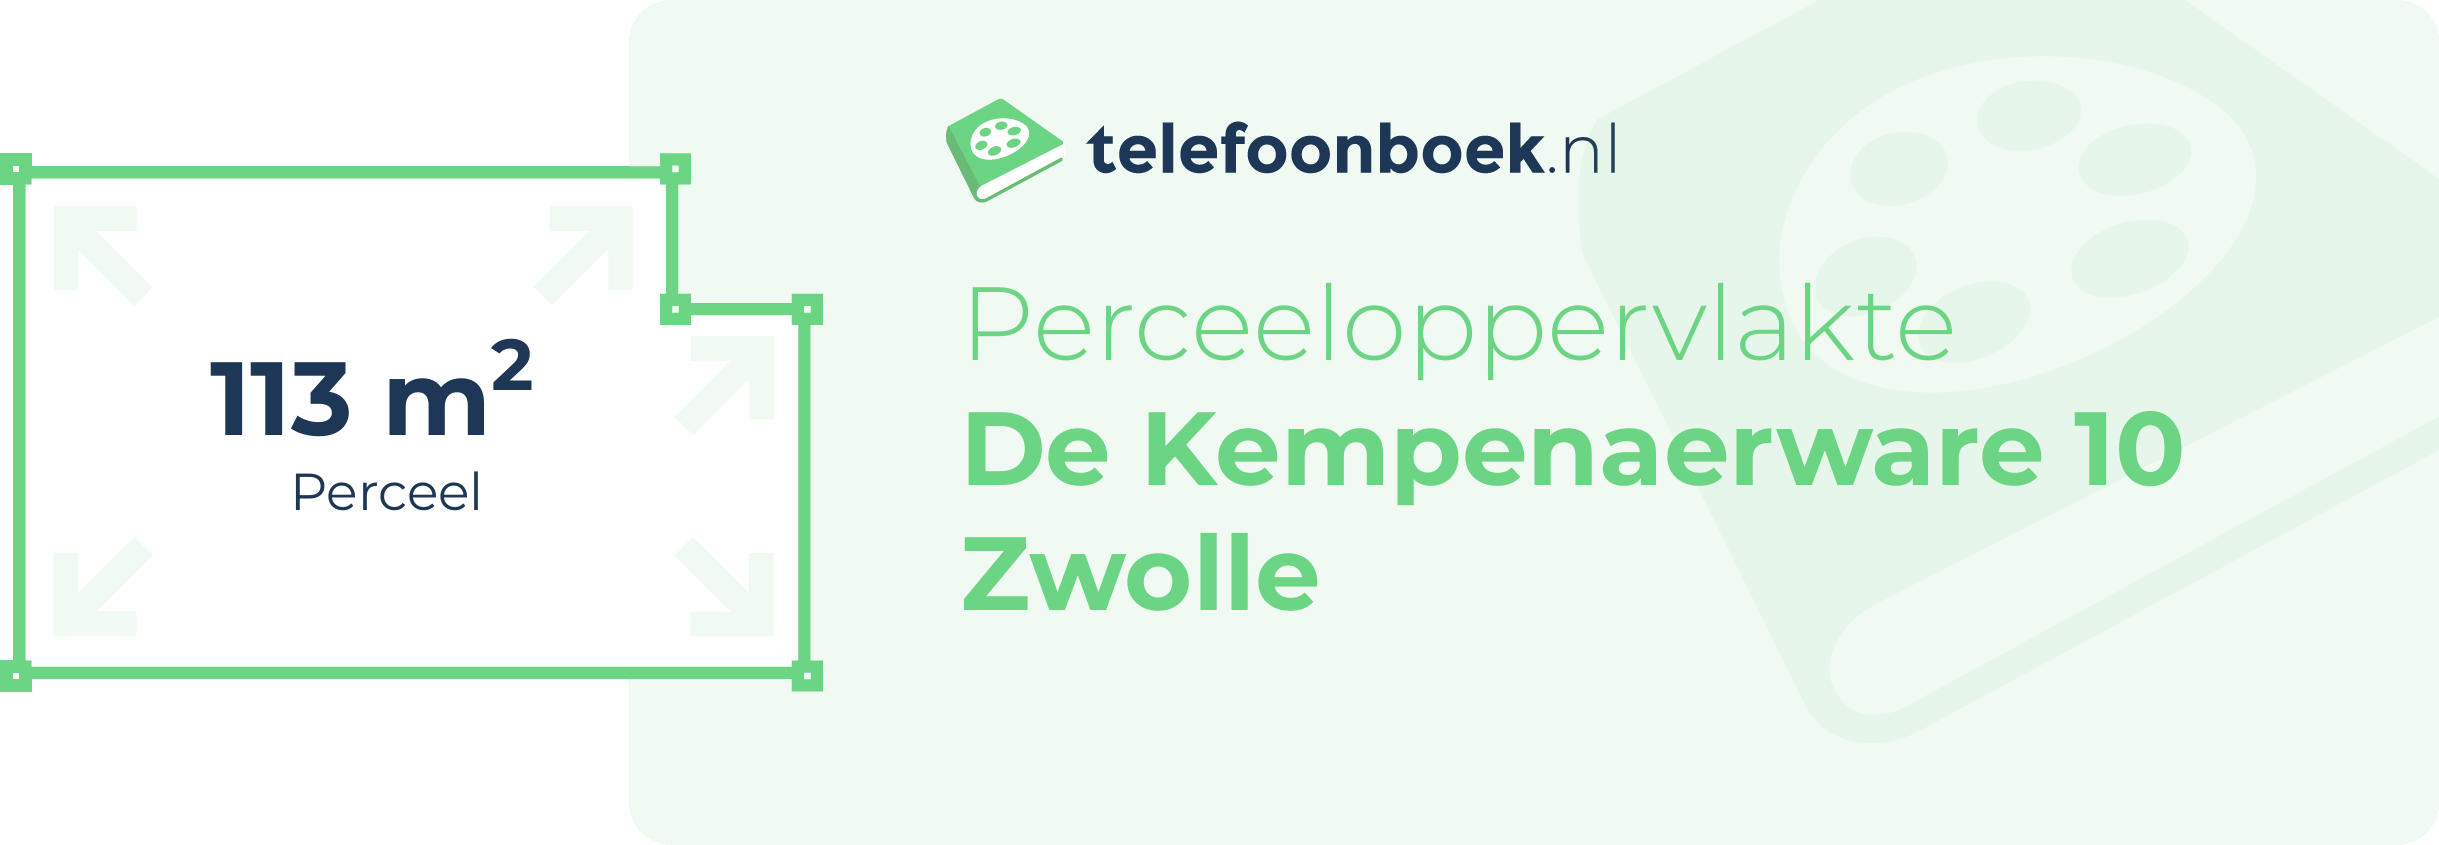 Perceeloppervlakte De Kempenaerware 10 Zwolle